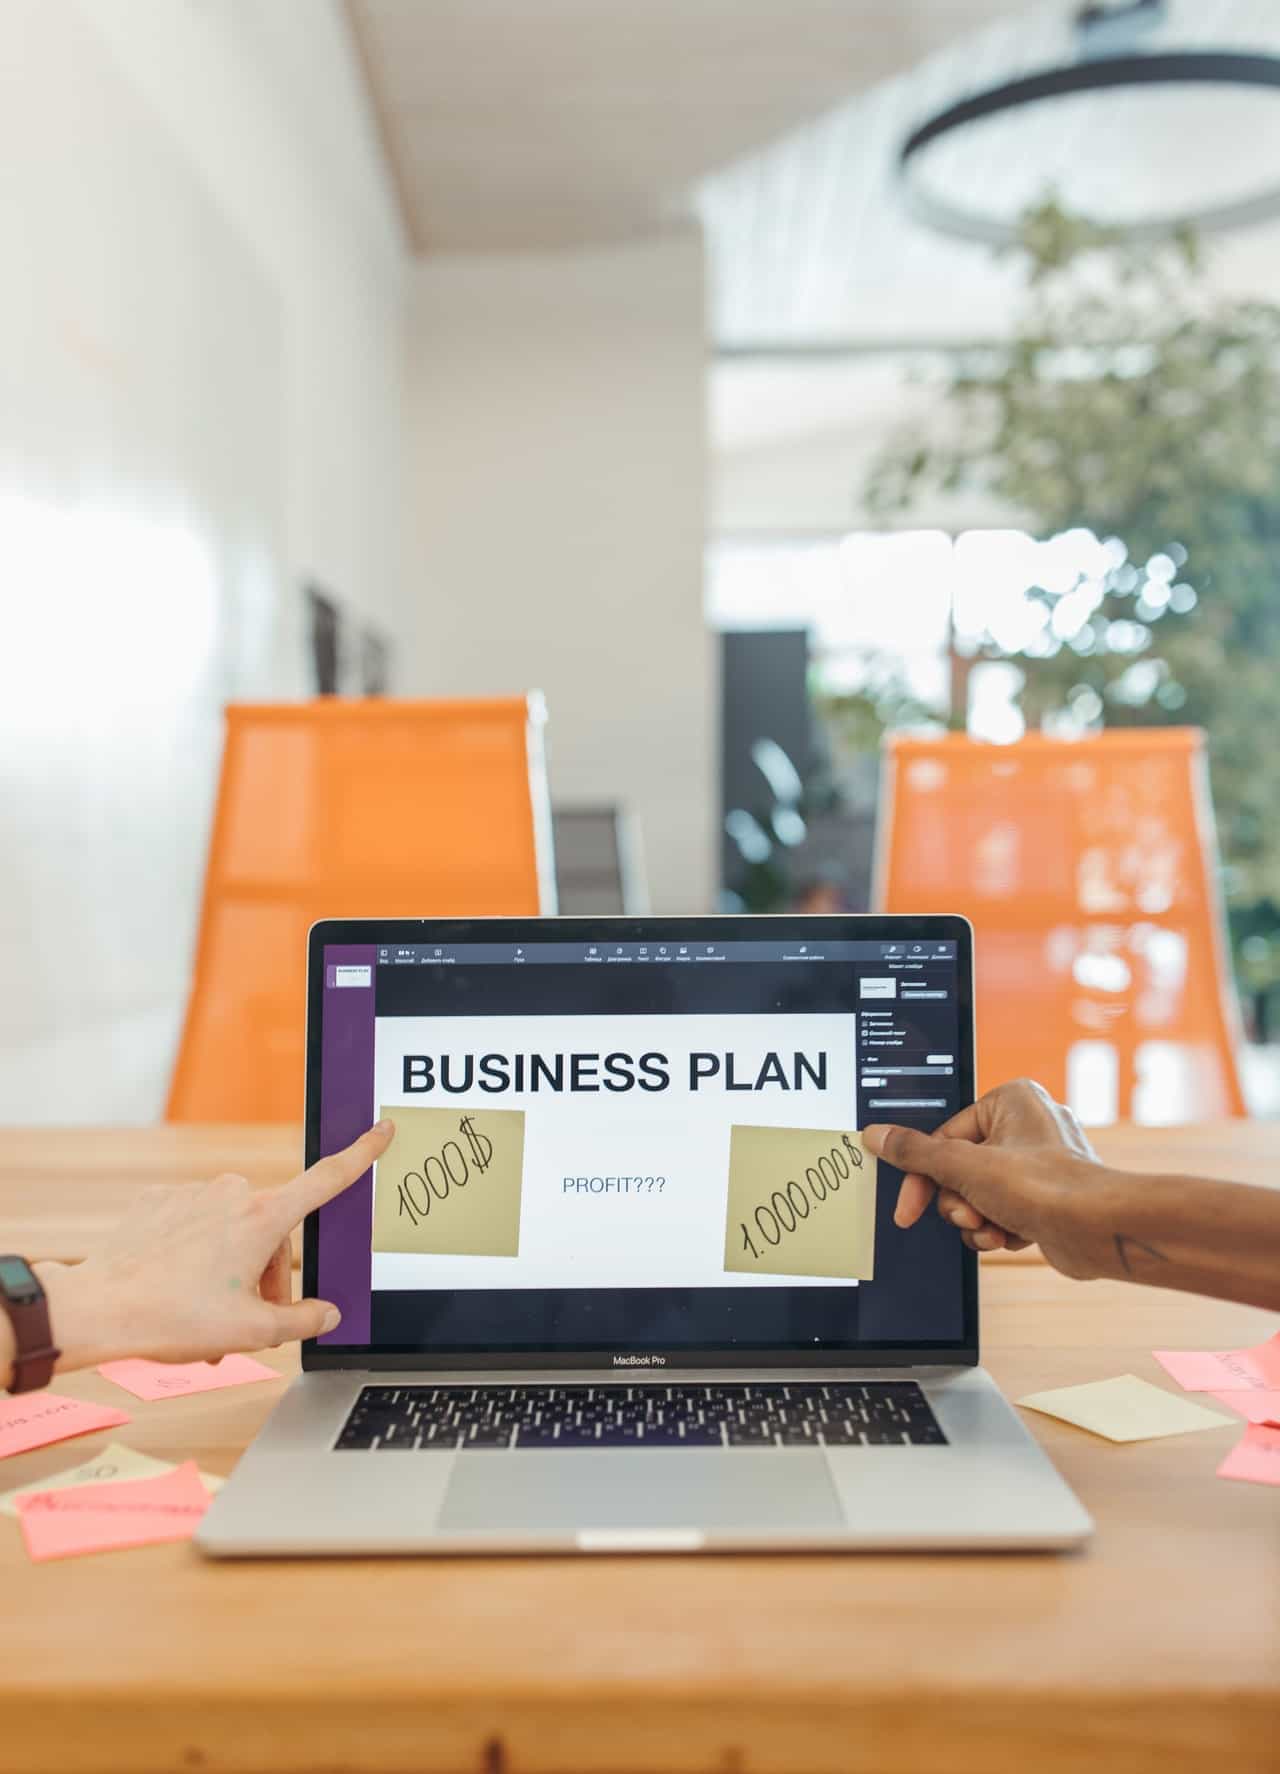 every business plan needs